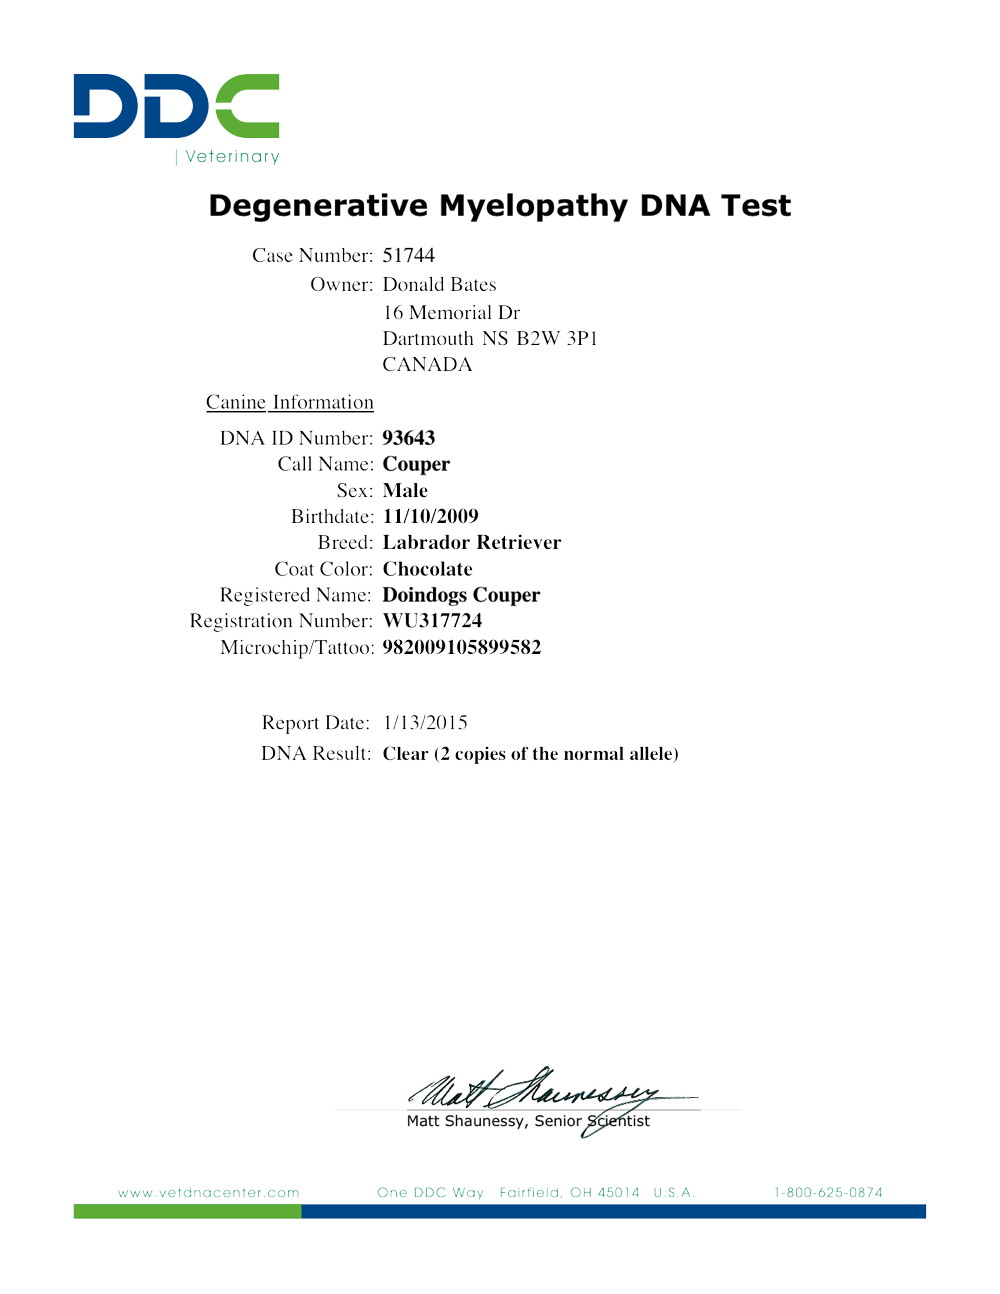 Couper's Degenerative Myelopathy DNA Test